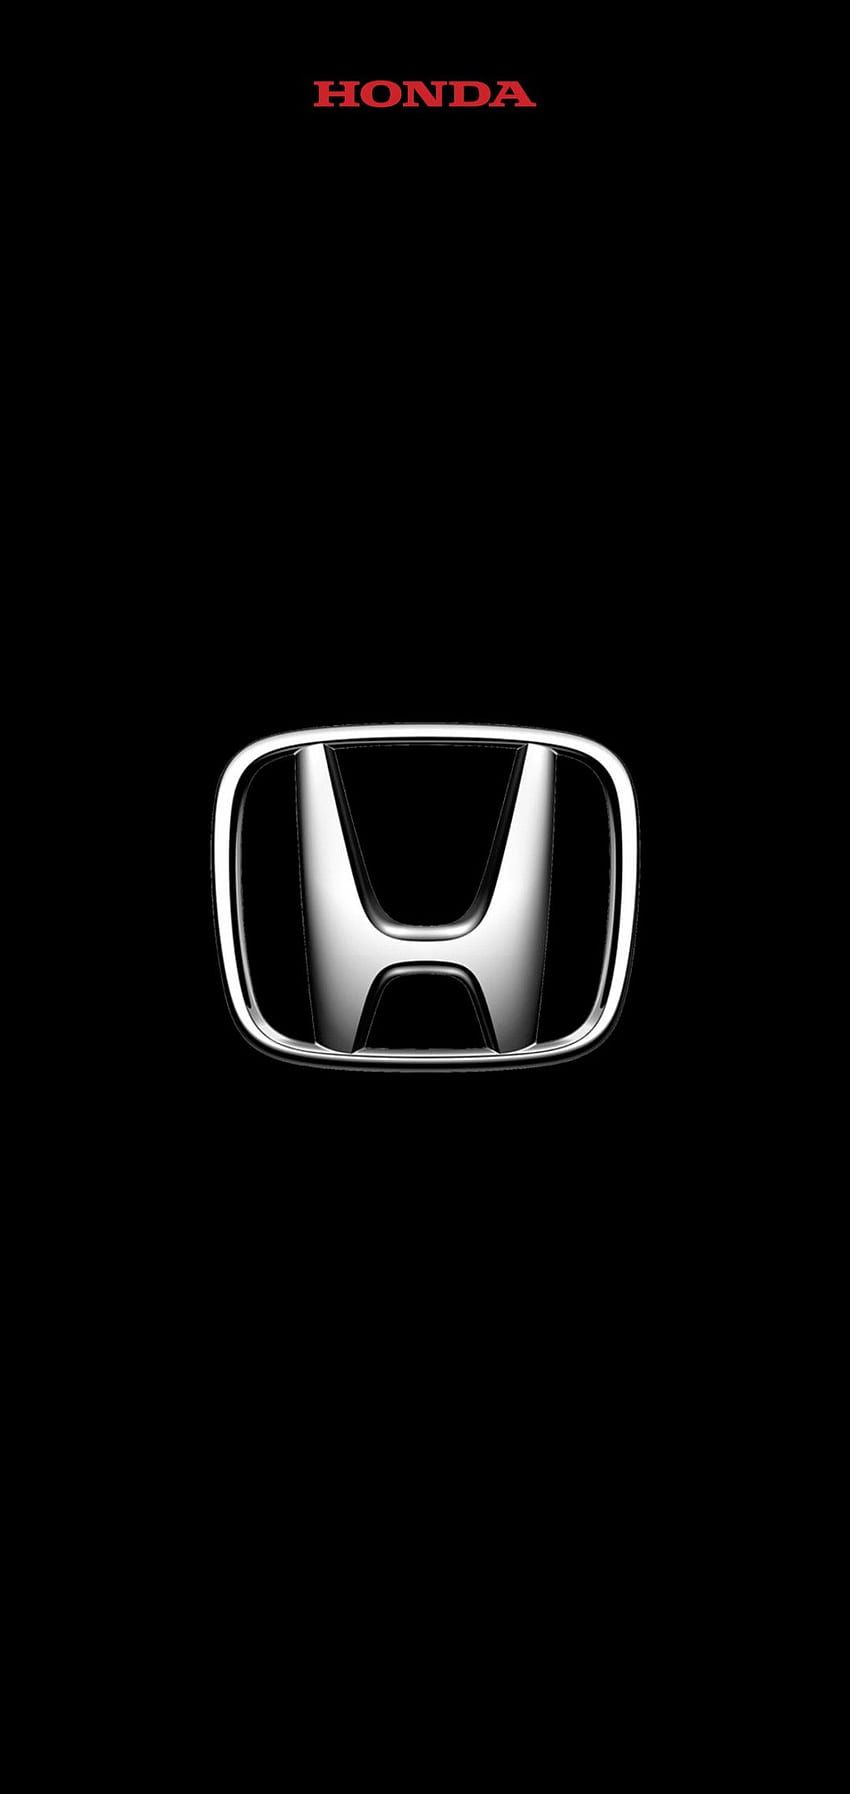 Néo On Honda Insight 2011 2014 . 혼다 시빅 자동차, 혼다 로고, 혼다 인사이트, 혼다 로고 아이폰 HD 전화 배경 화면